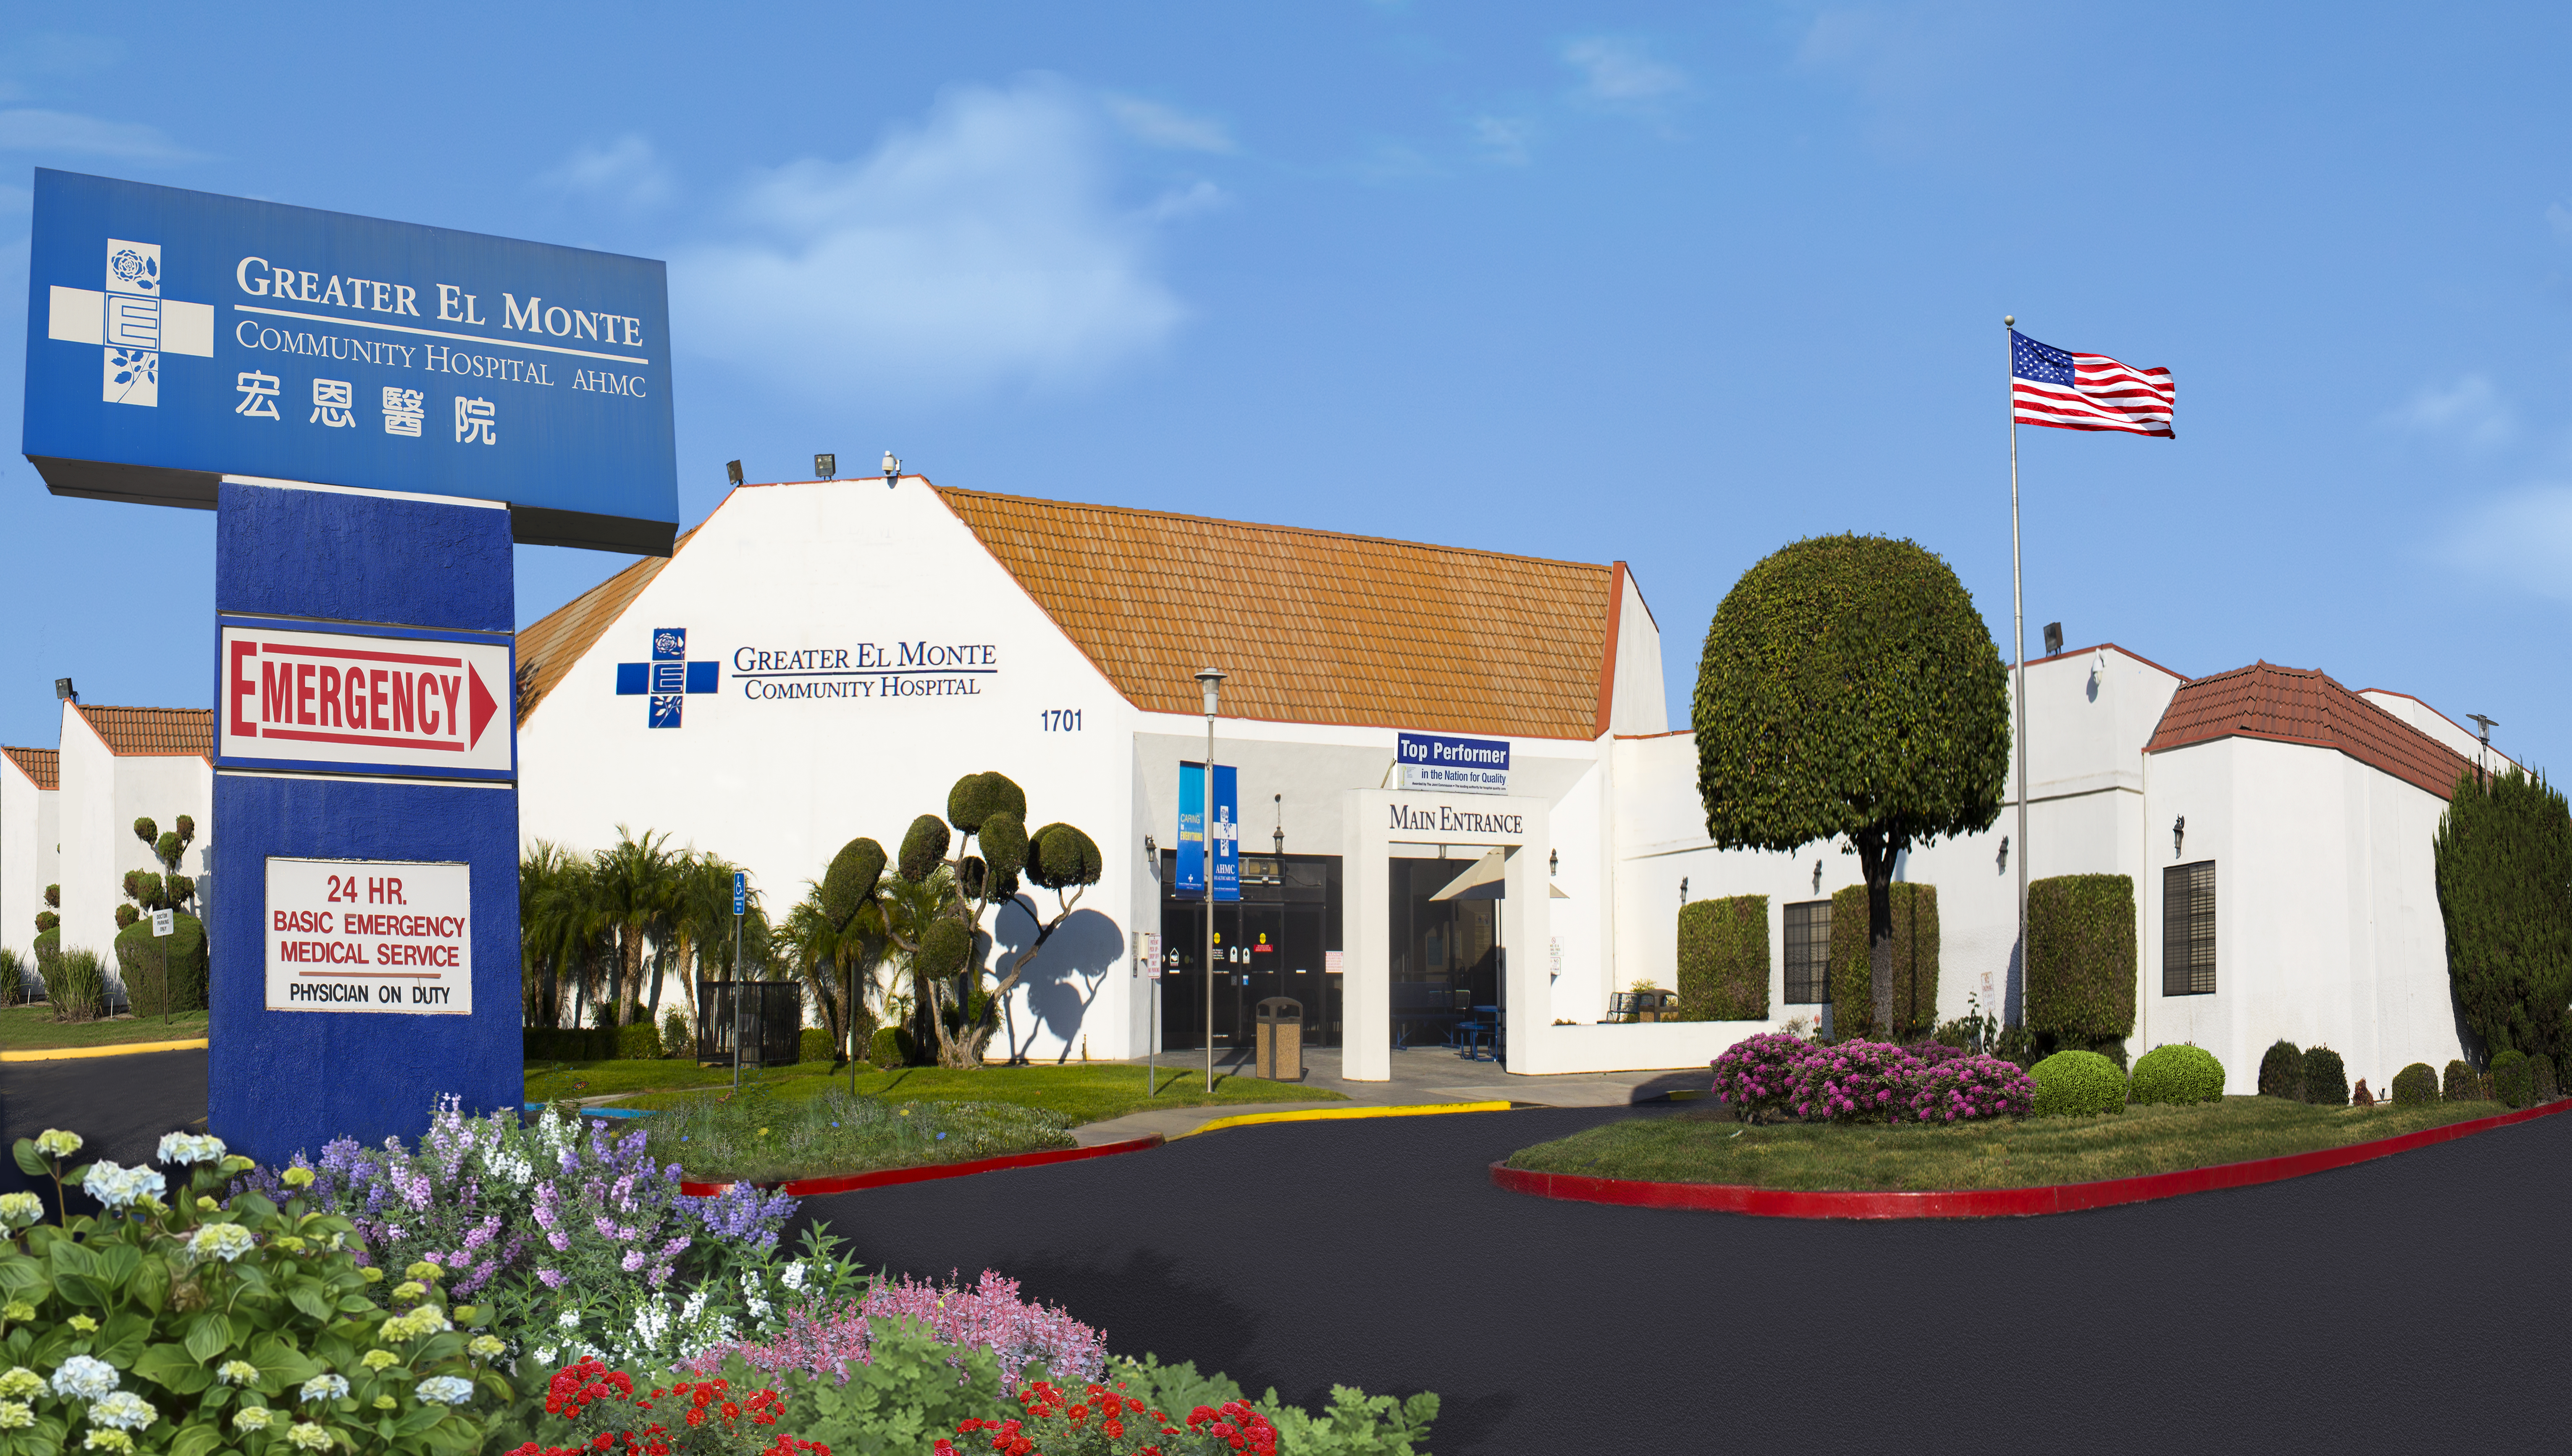 Greater El Monte
Community Hospital
1701